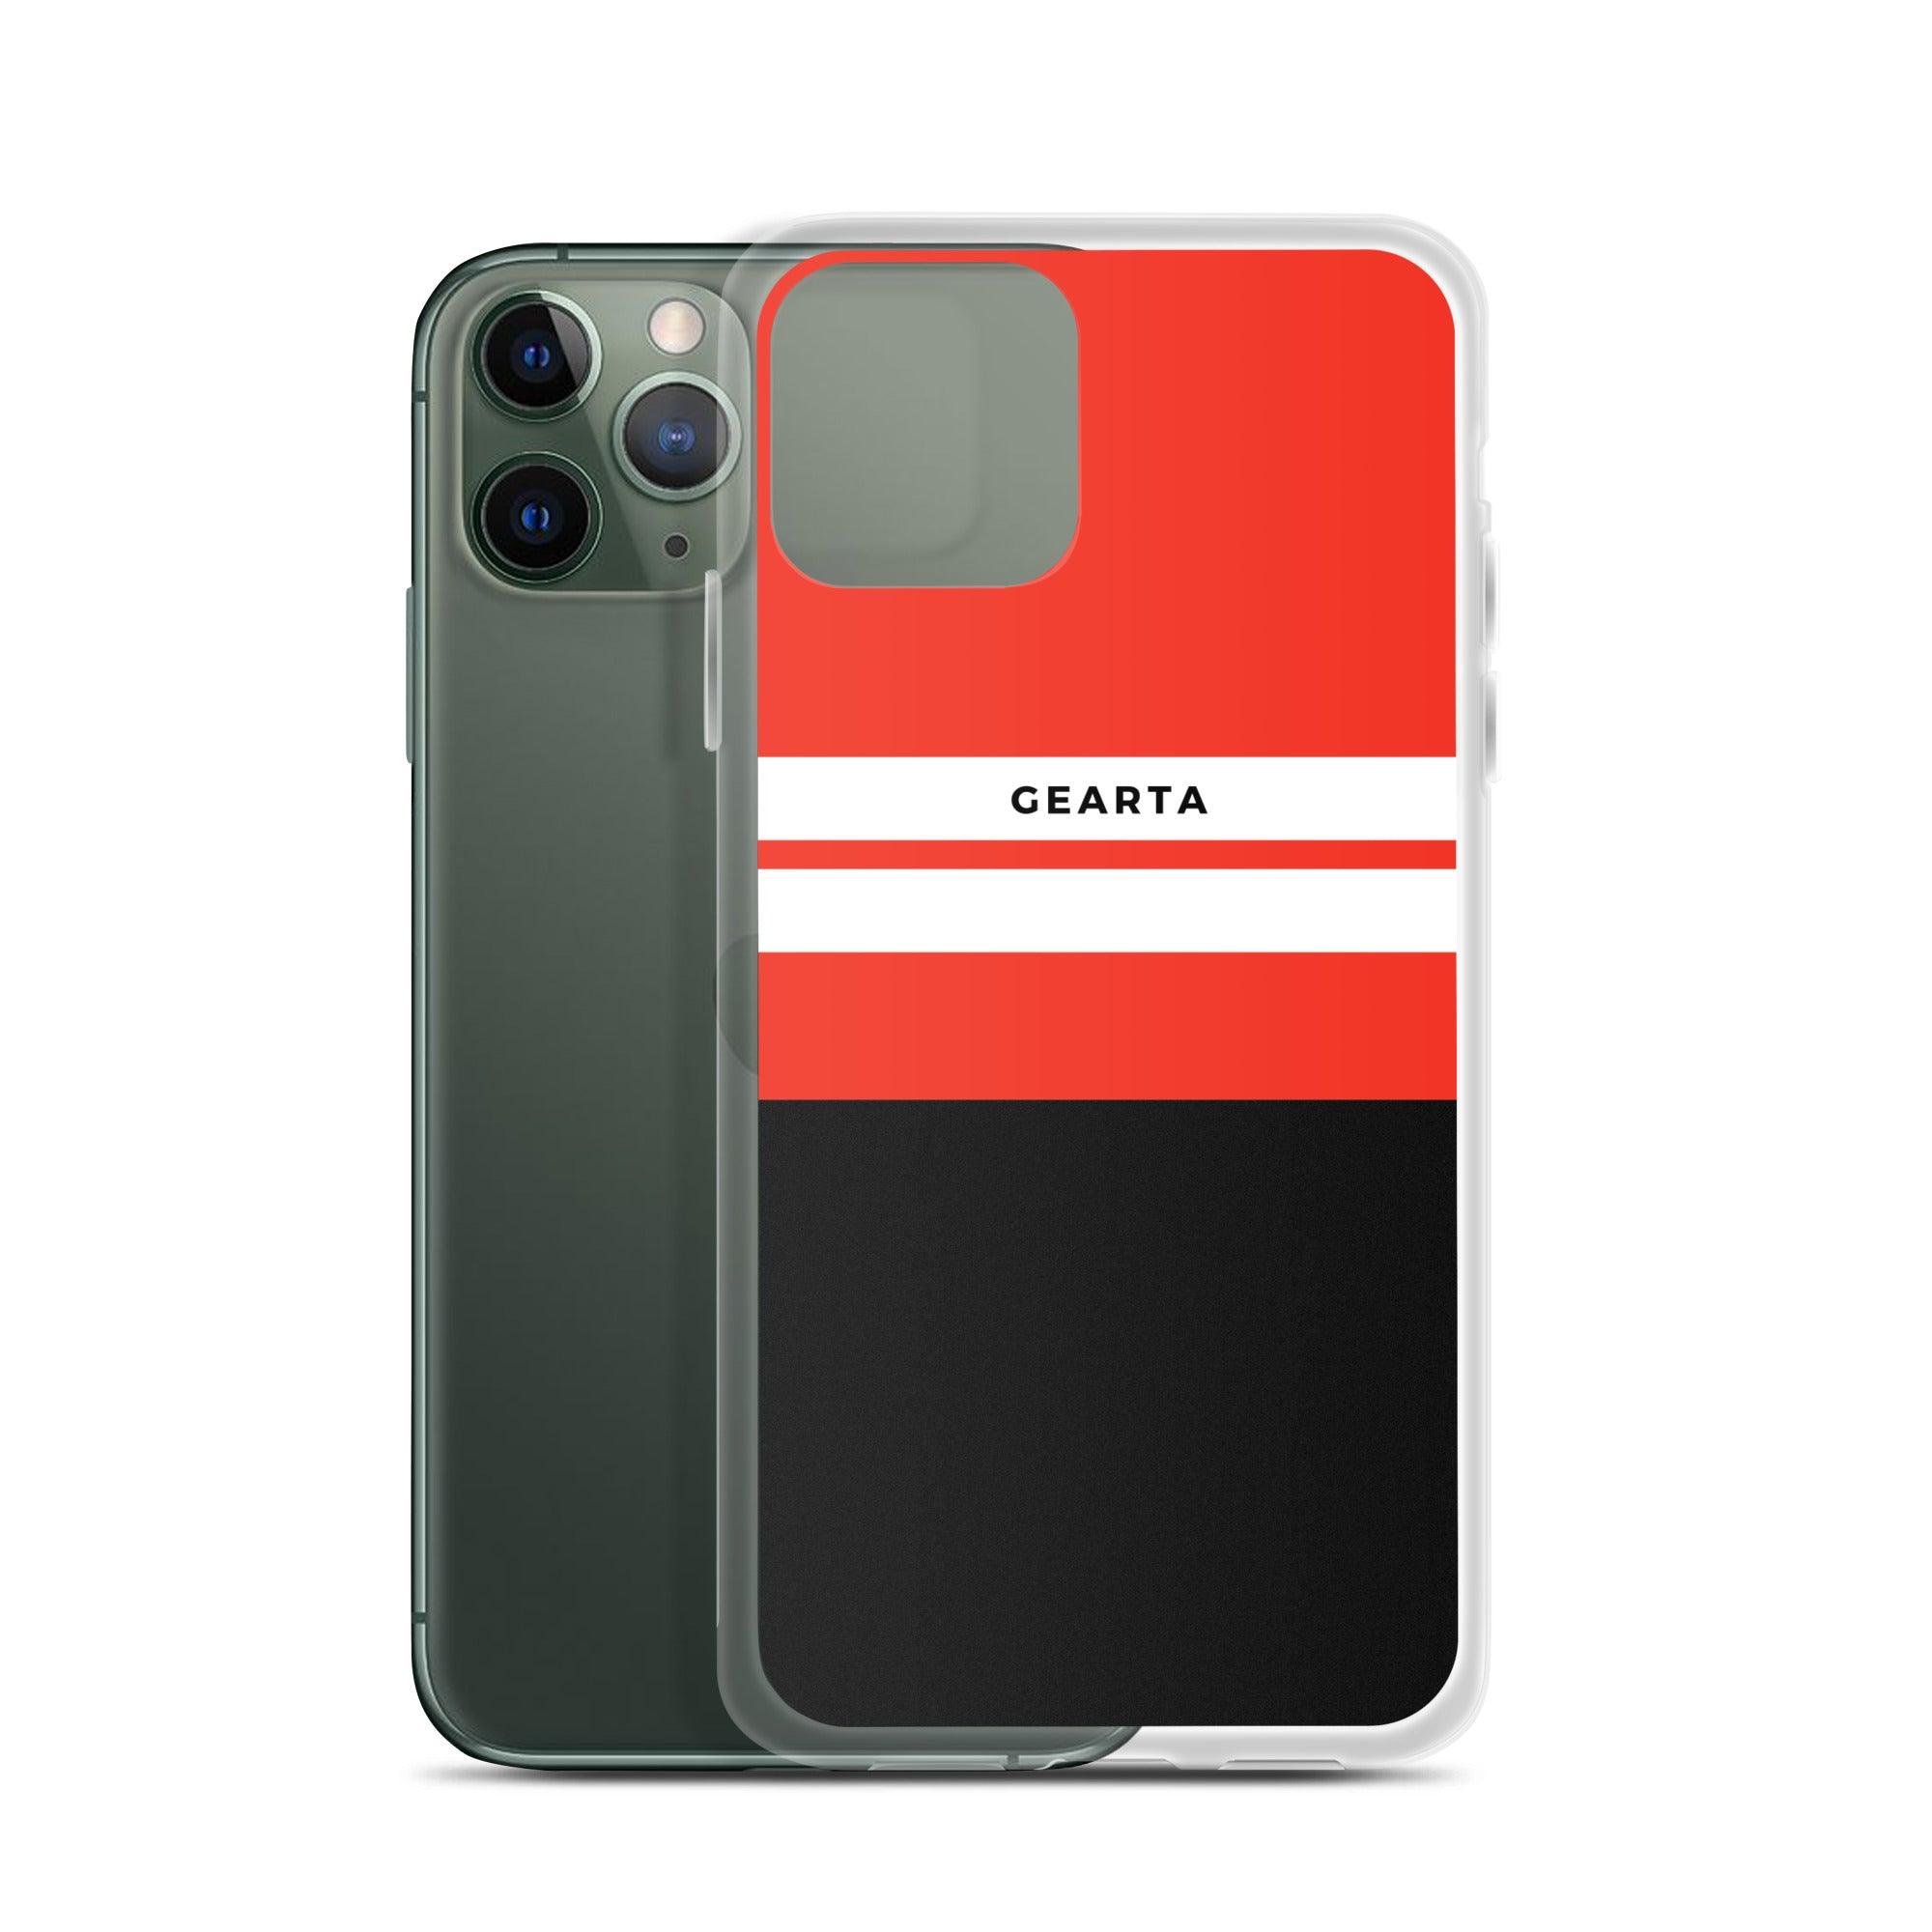 GEARTA - Red & Black Color Block iPhone Case